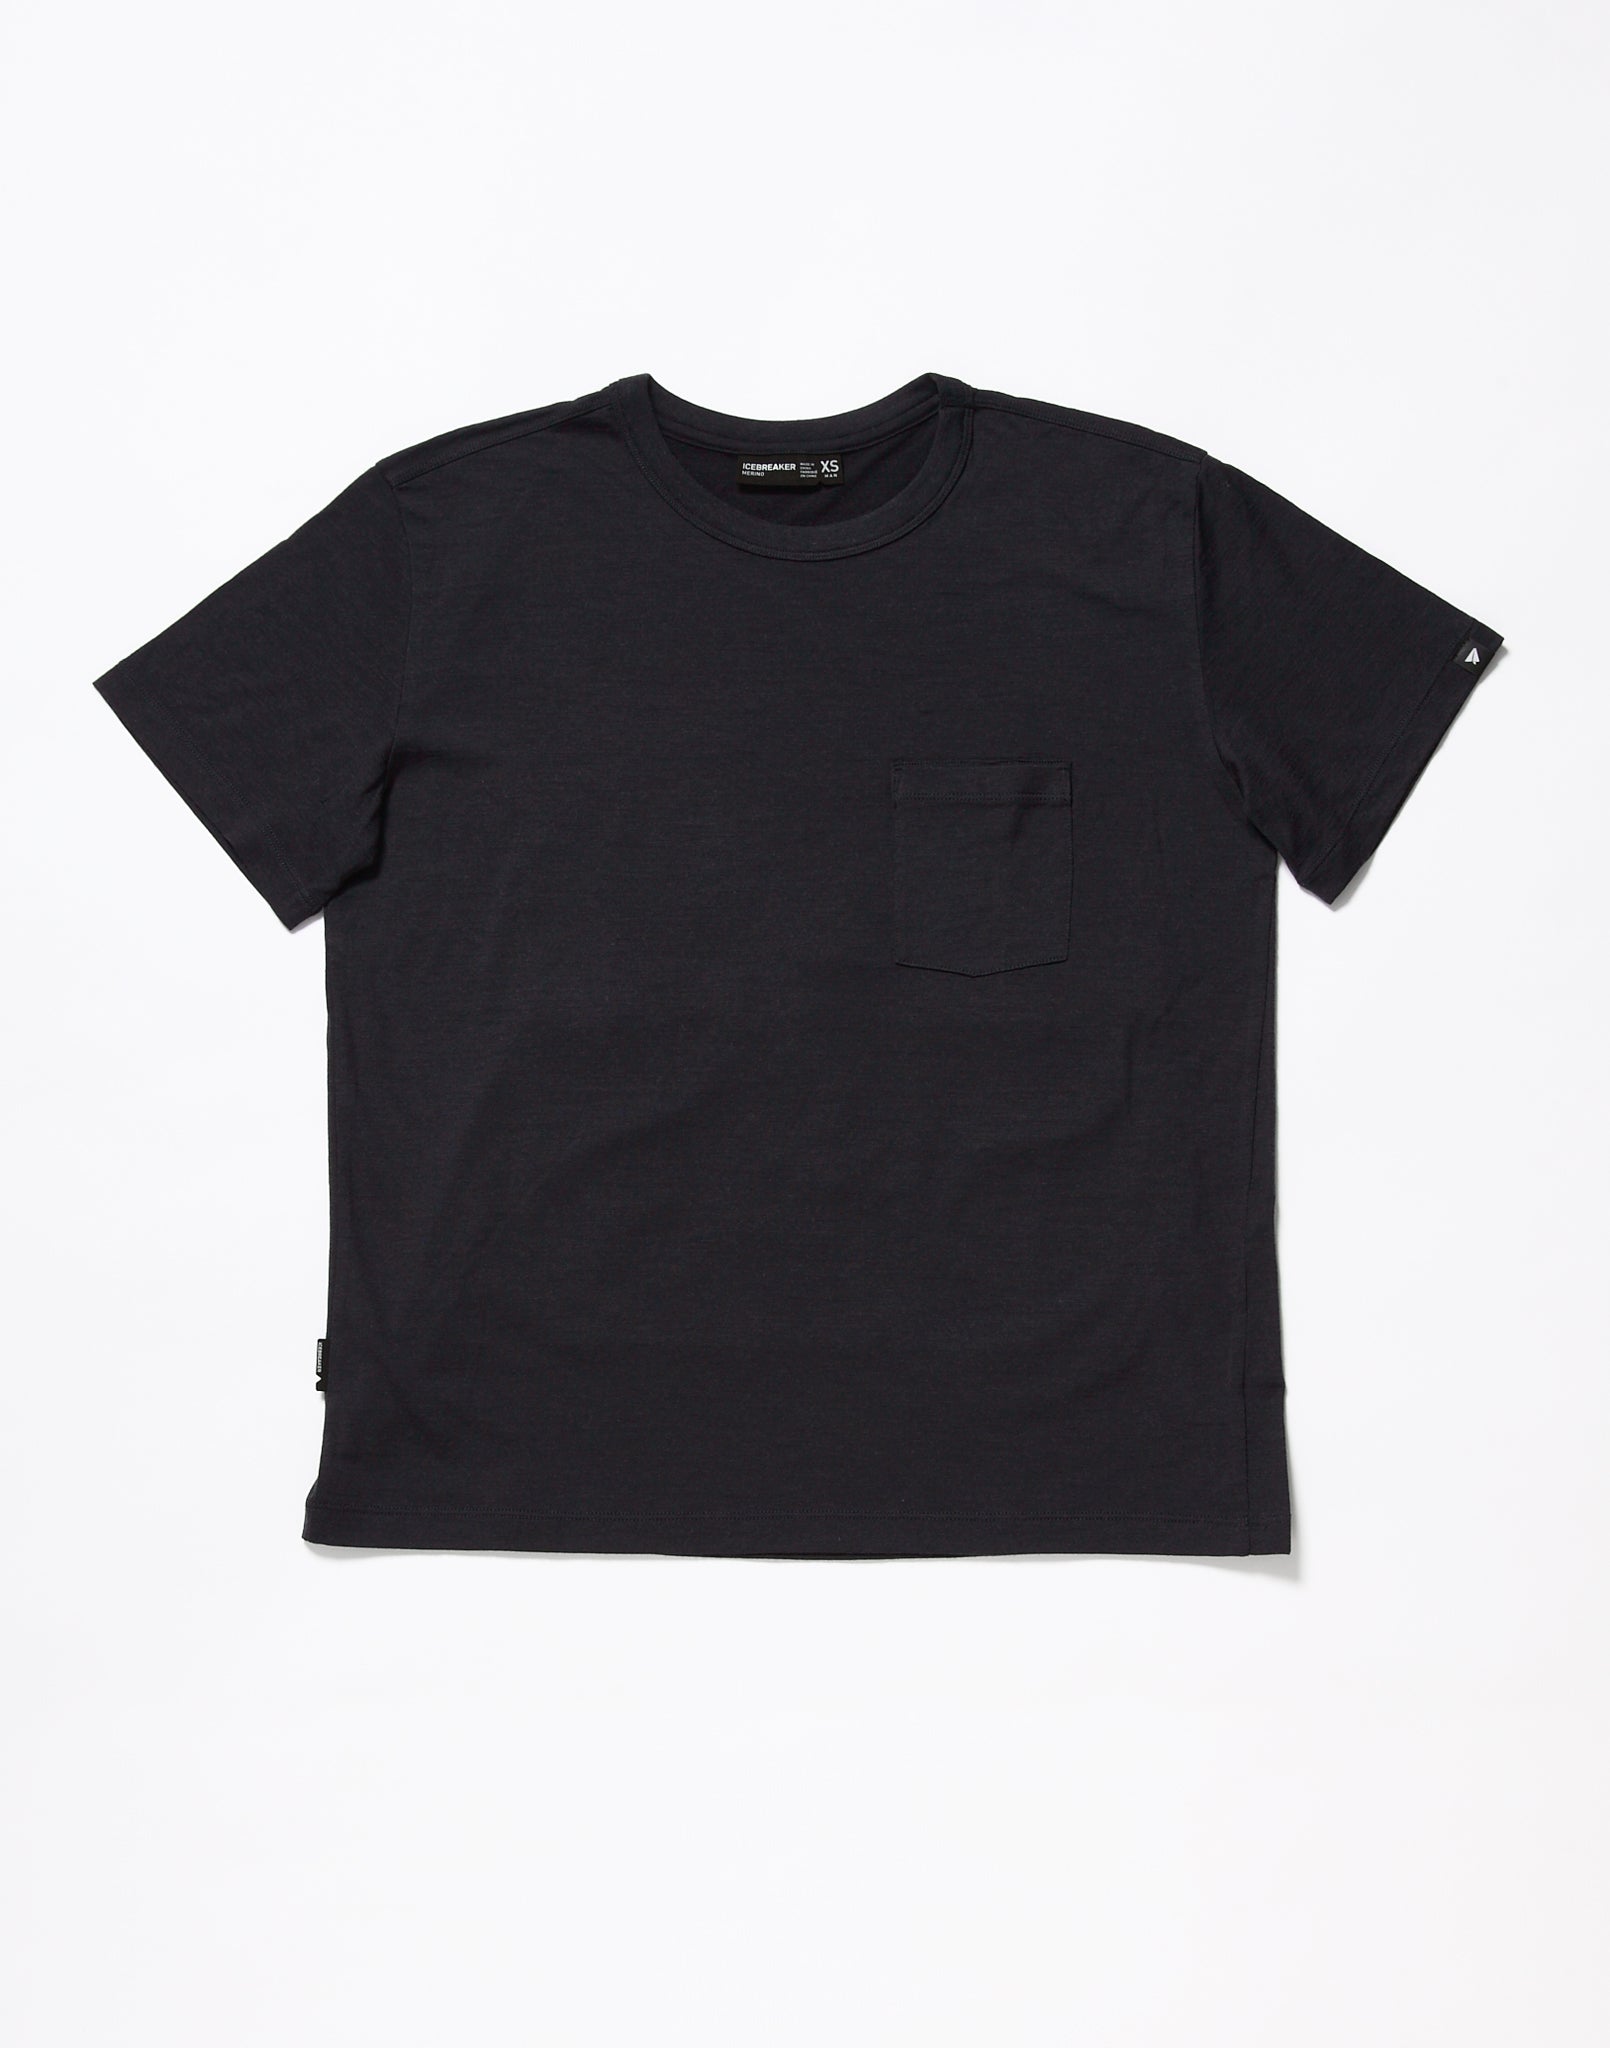 NEXTRAVELER　メリノウール100%Tシャツ（黒）メリノウール